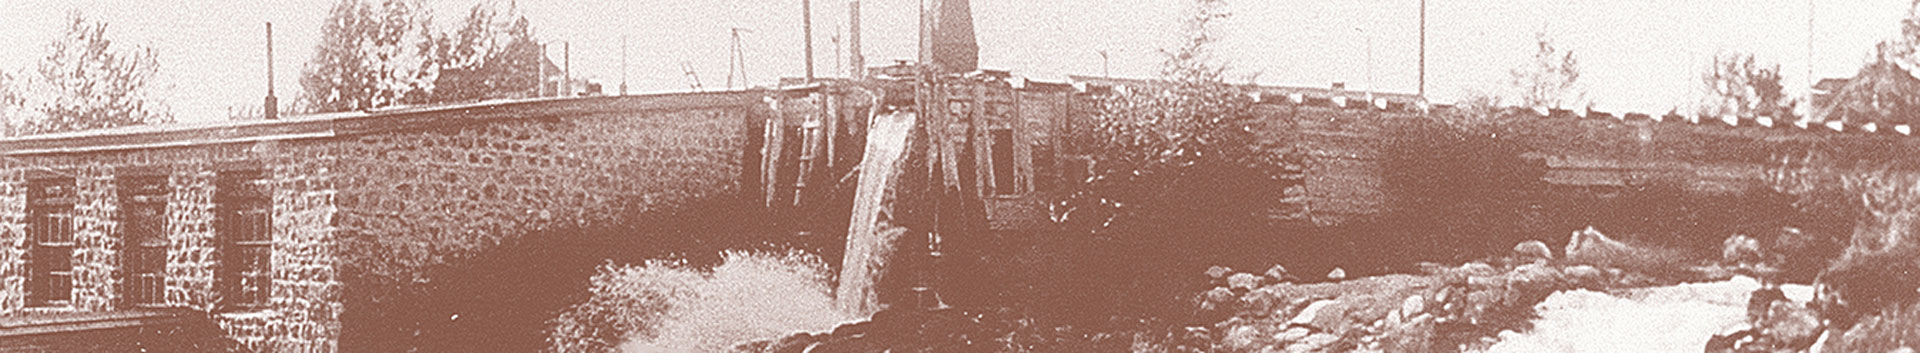 photo of historic power plant